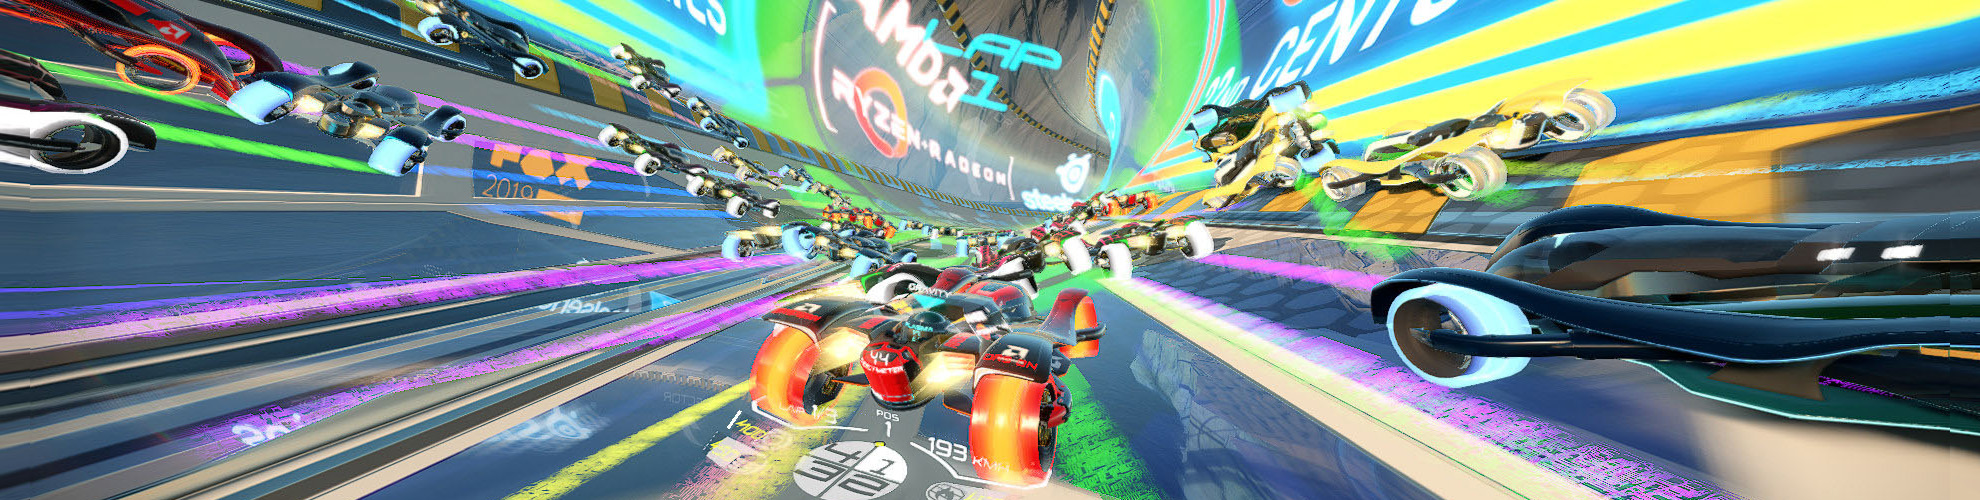 22 Racing Series - Real-Time Gameplay Image